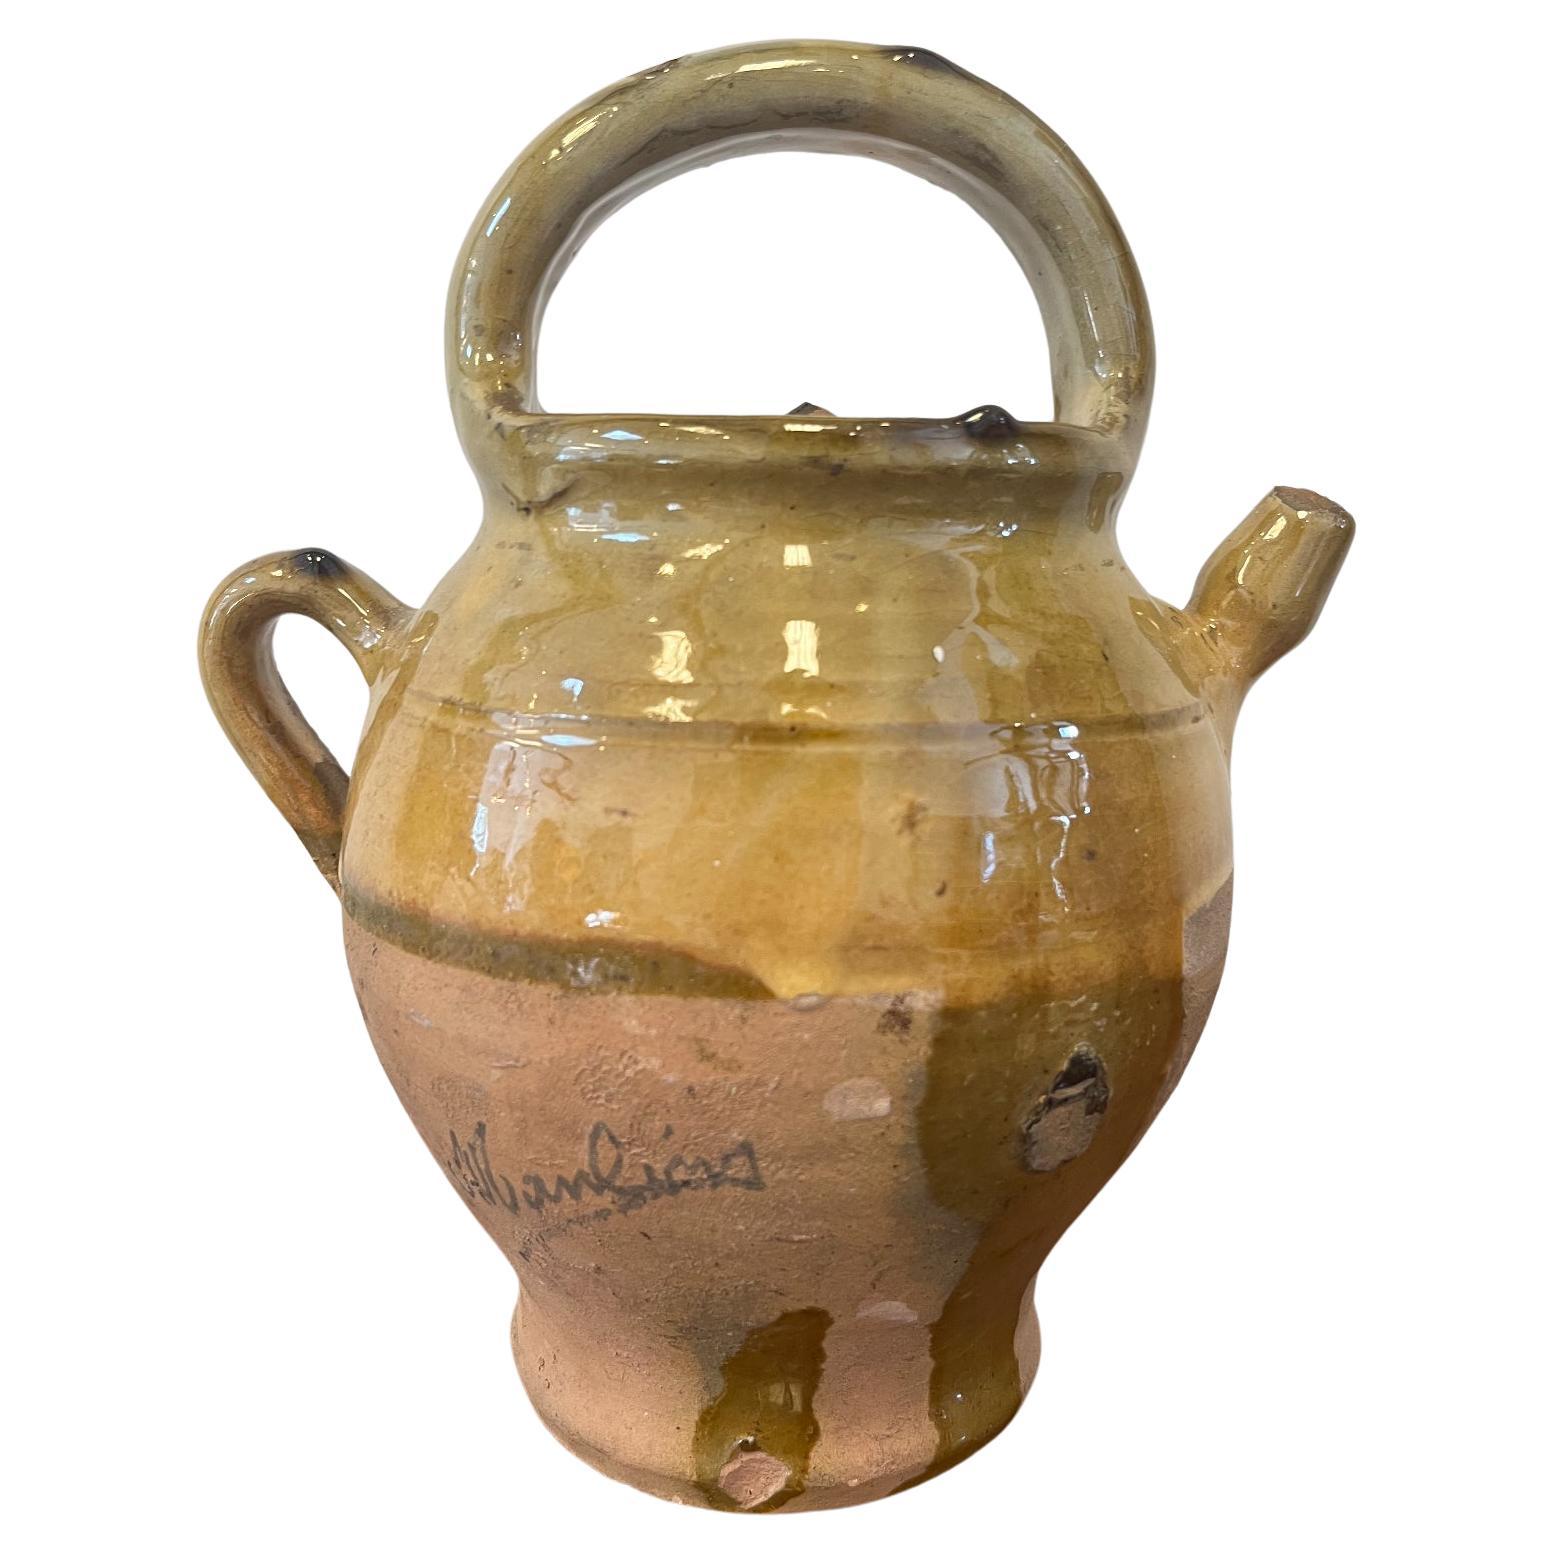 Late 19th Century French Provincial Yellow Glaze Terra Cotta Wine Jug